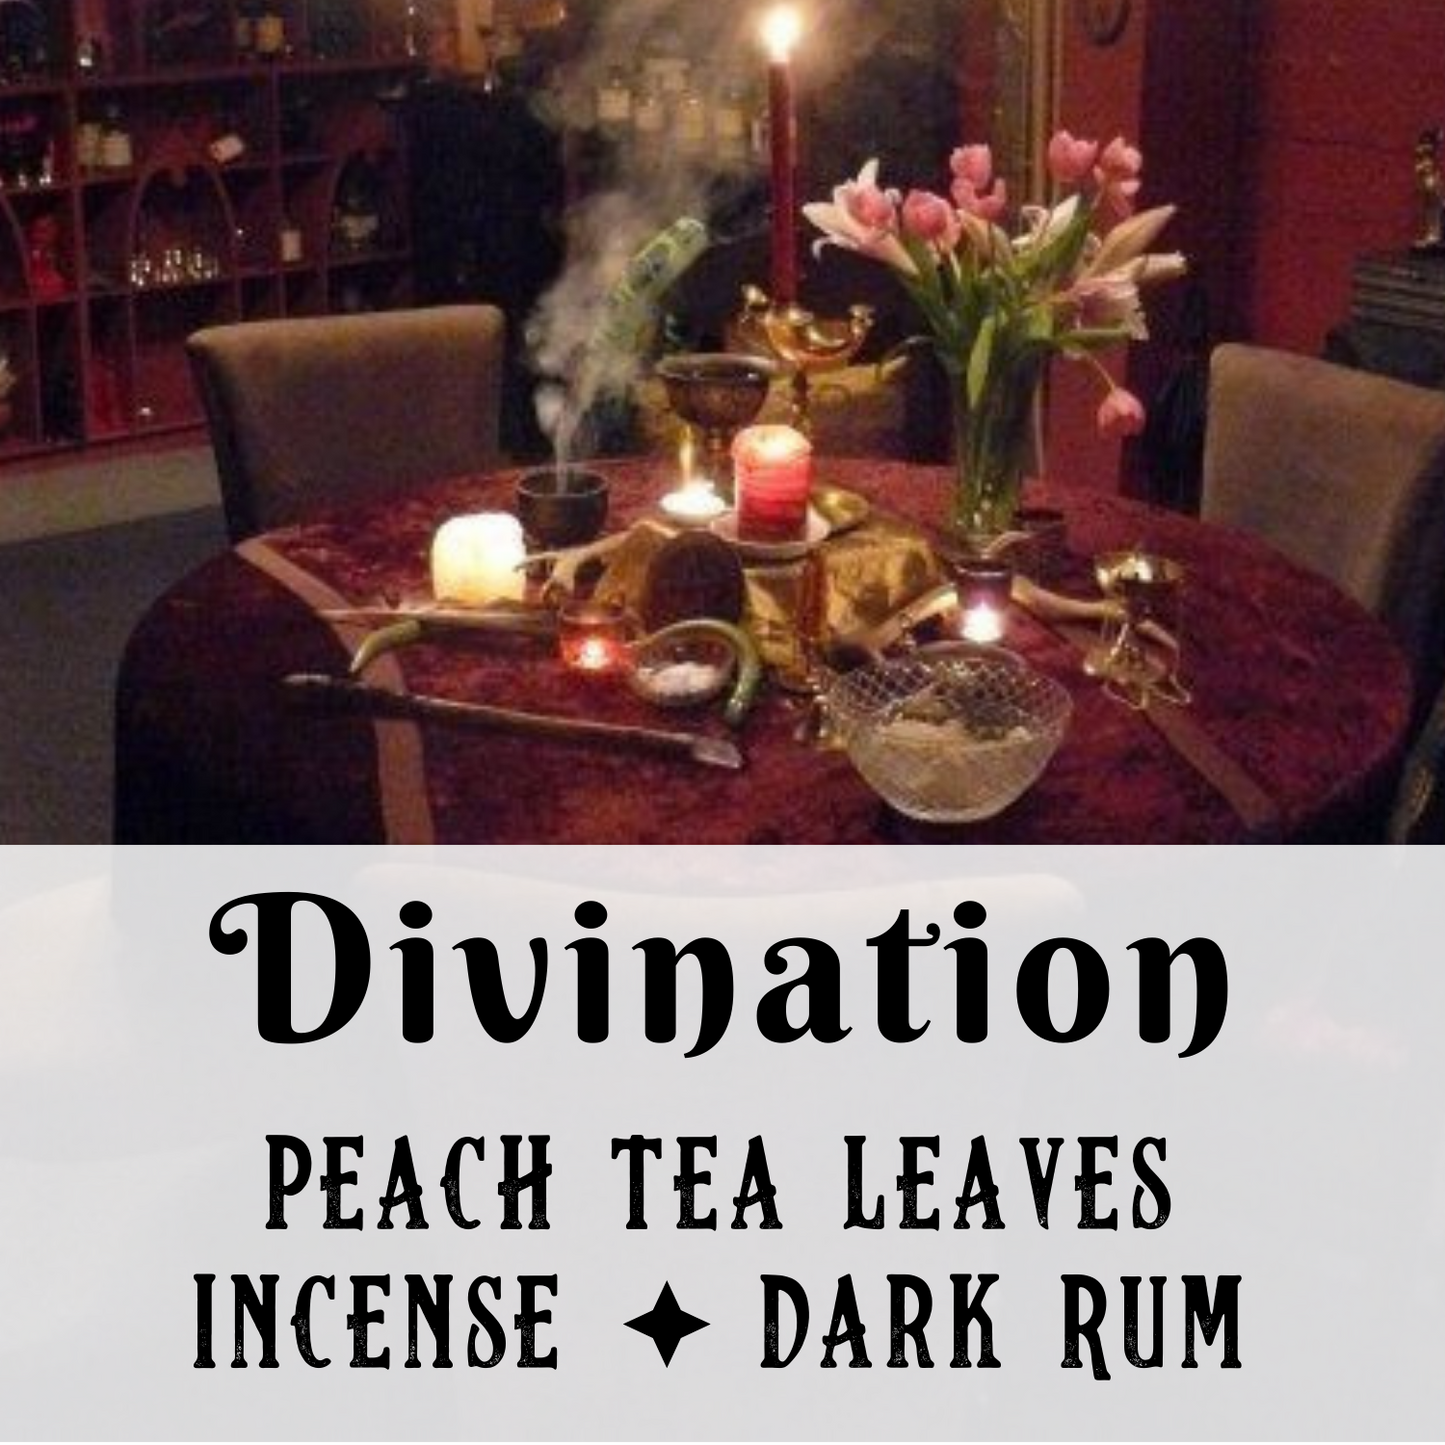 Divination Perfume Oil - Birch & Besom